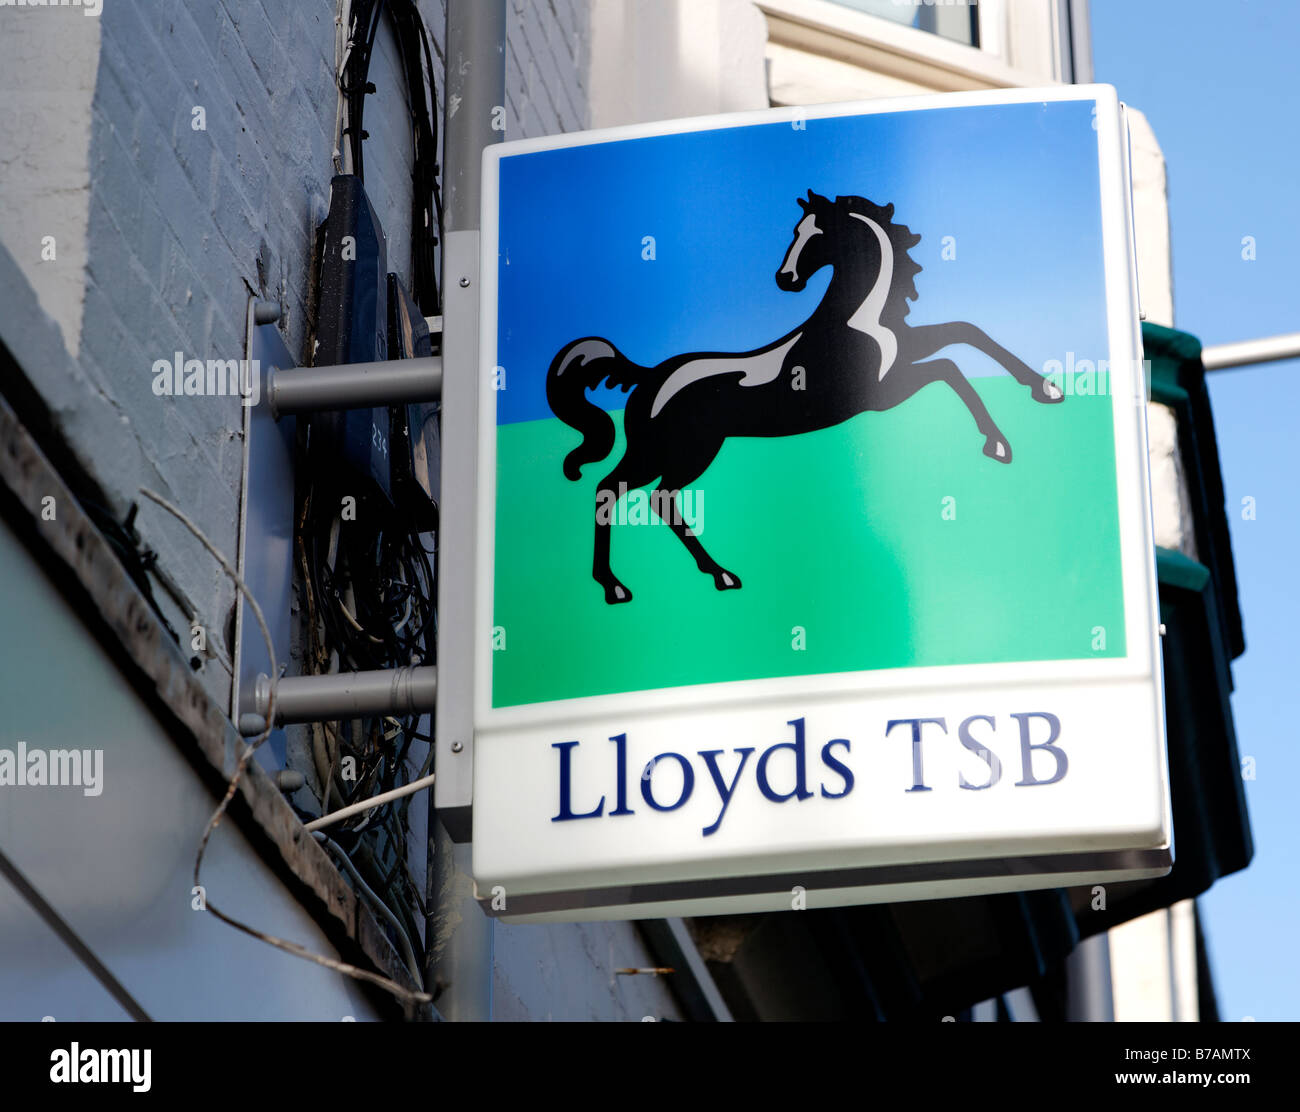 Lloyds TSB bank Black Horse sign Stock Photo